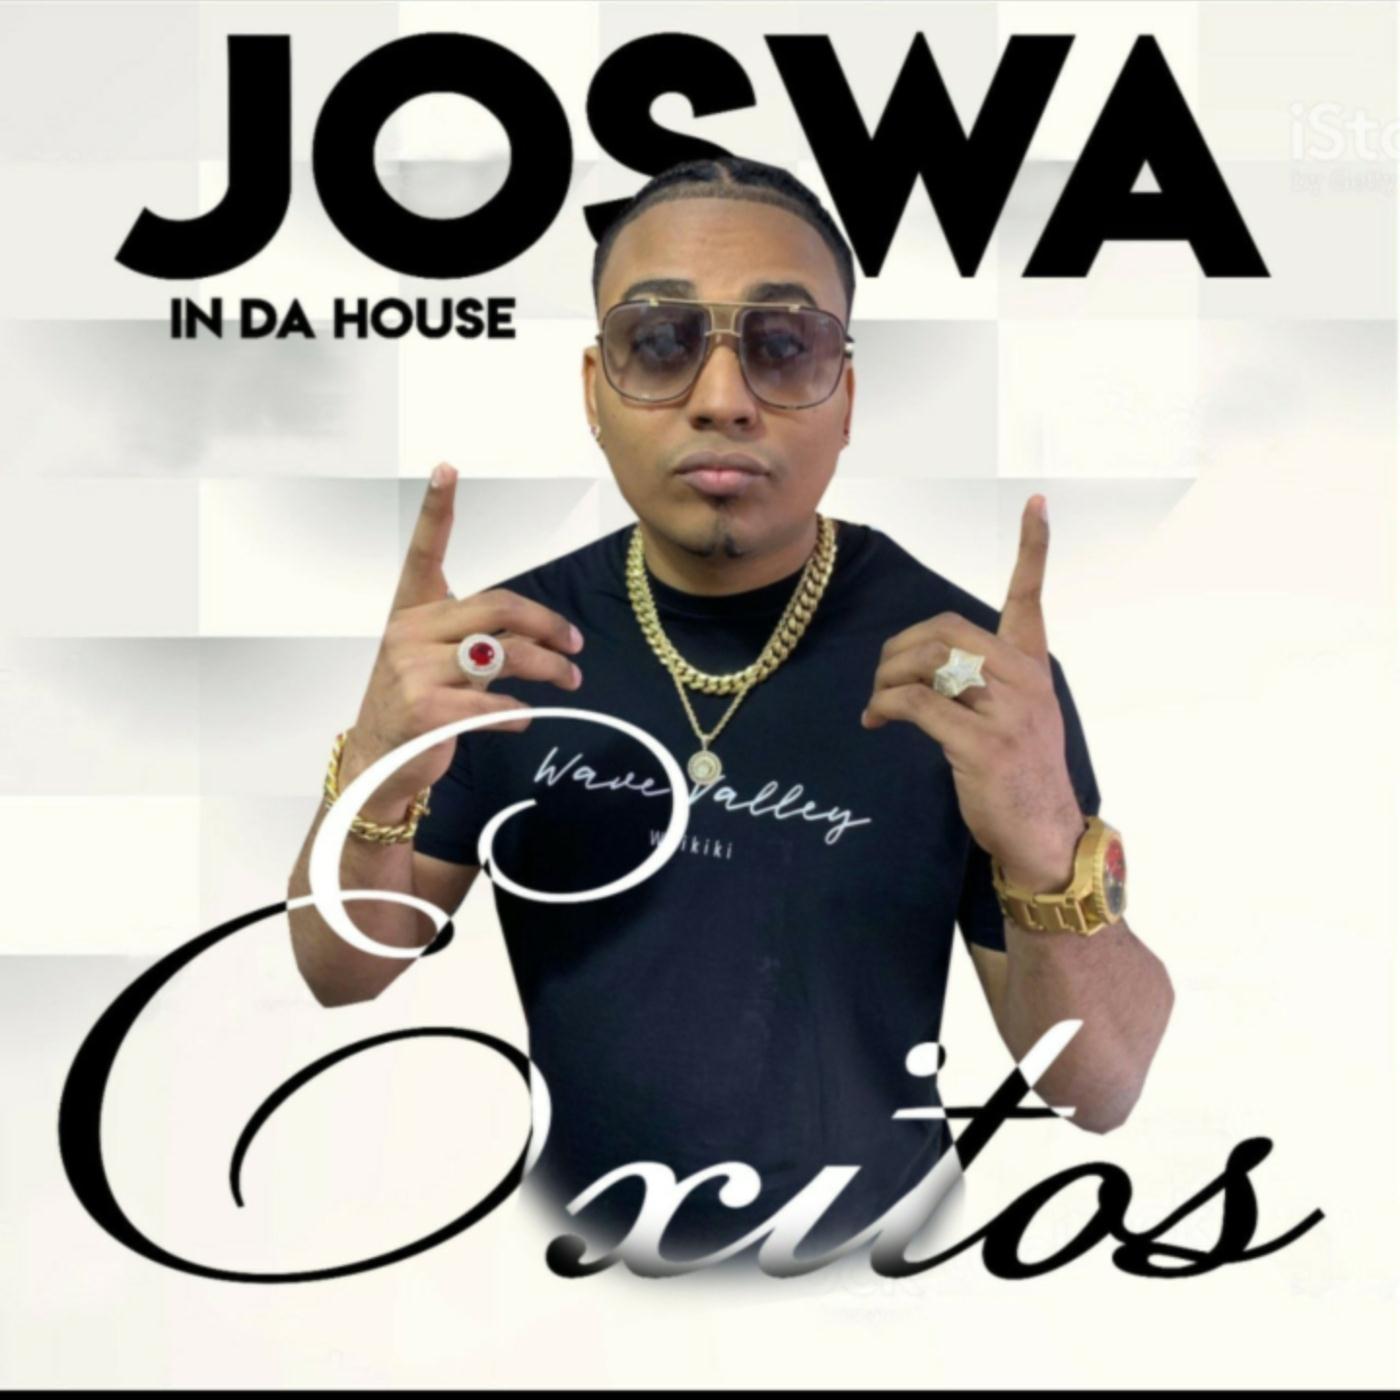 Joswa In Da House - Baila el Tra (Remix) [feat. Don Chezina]